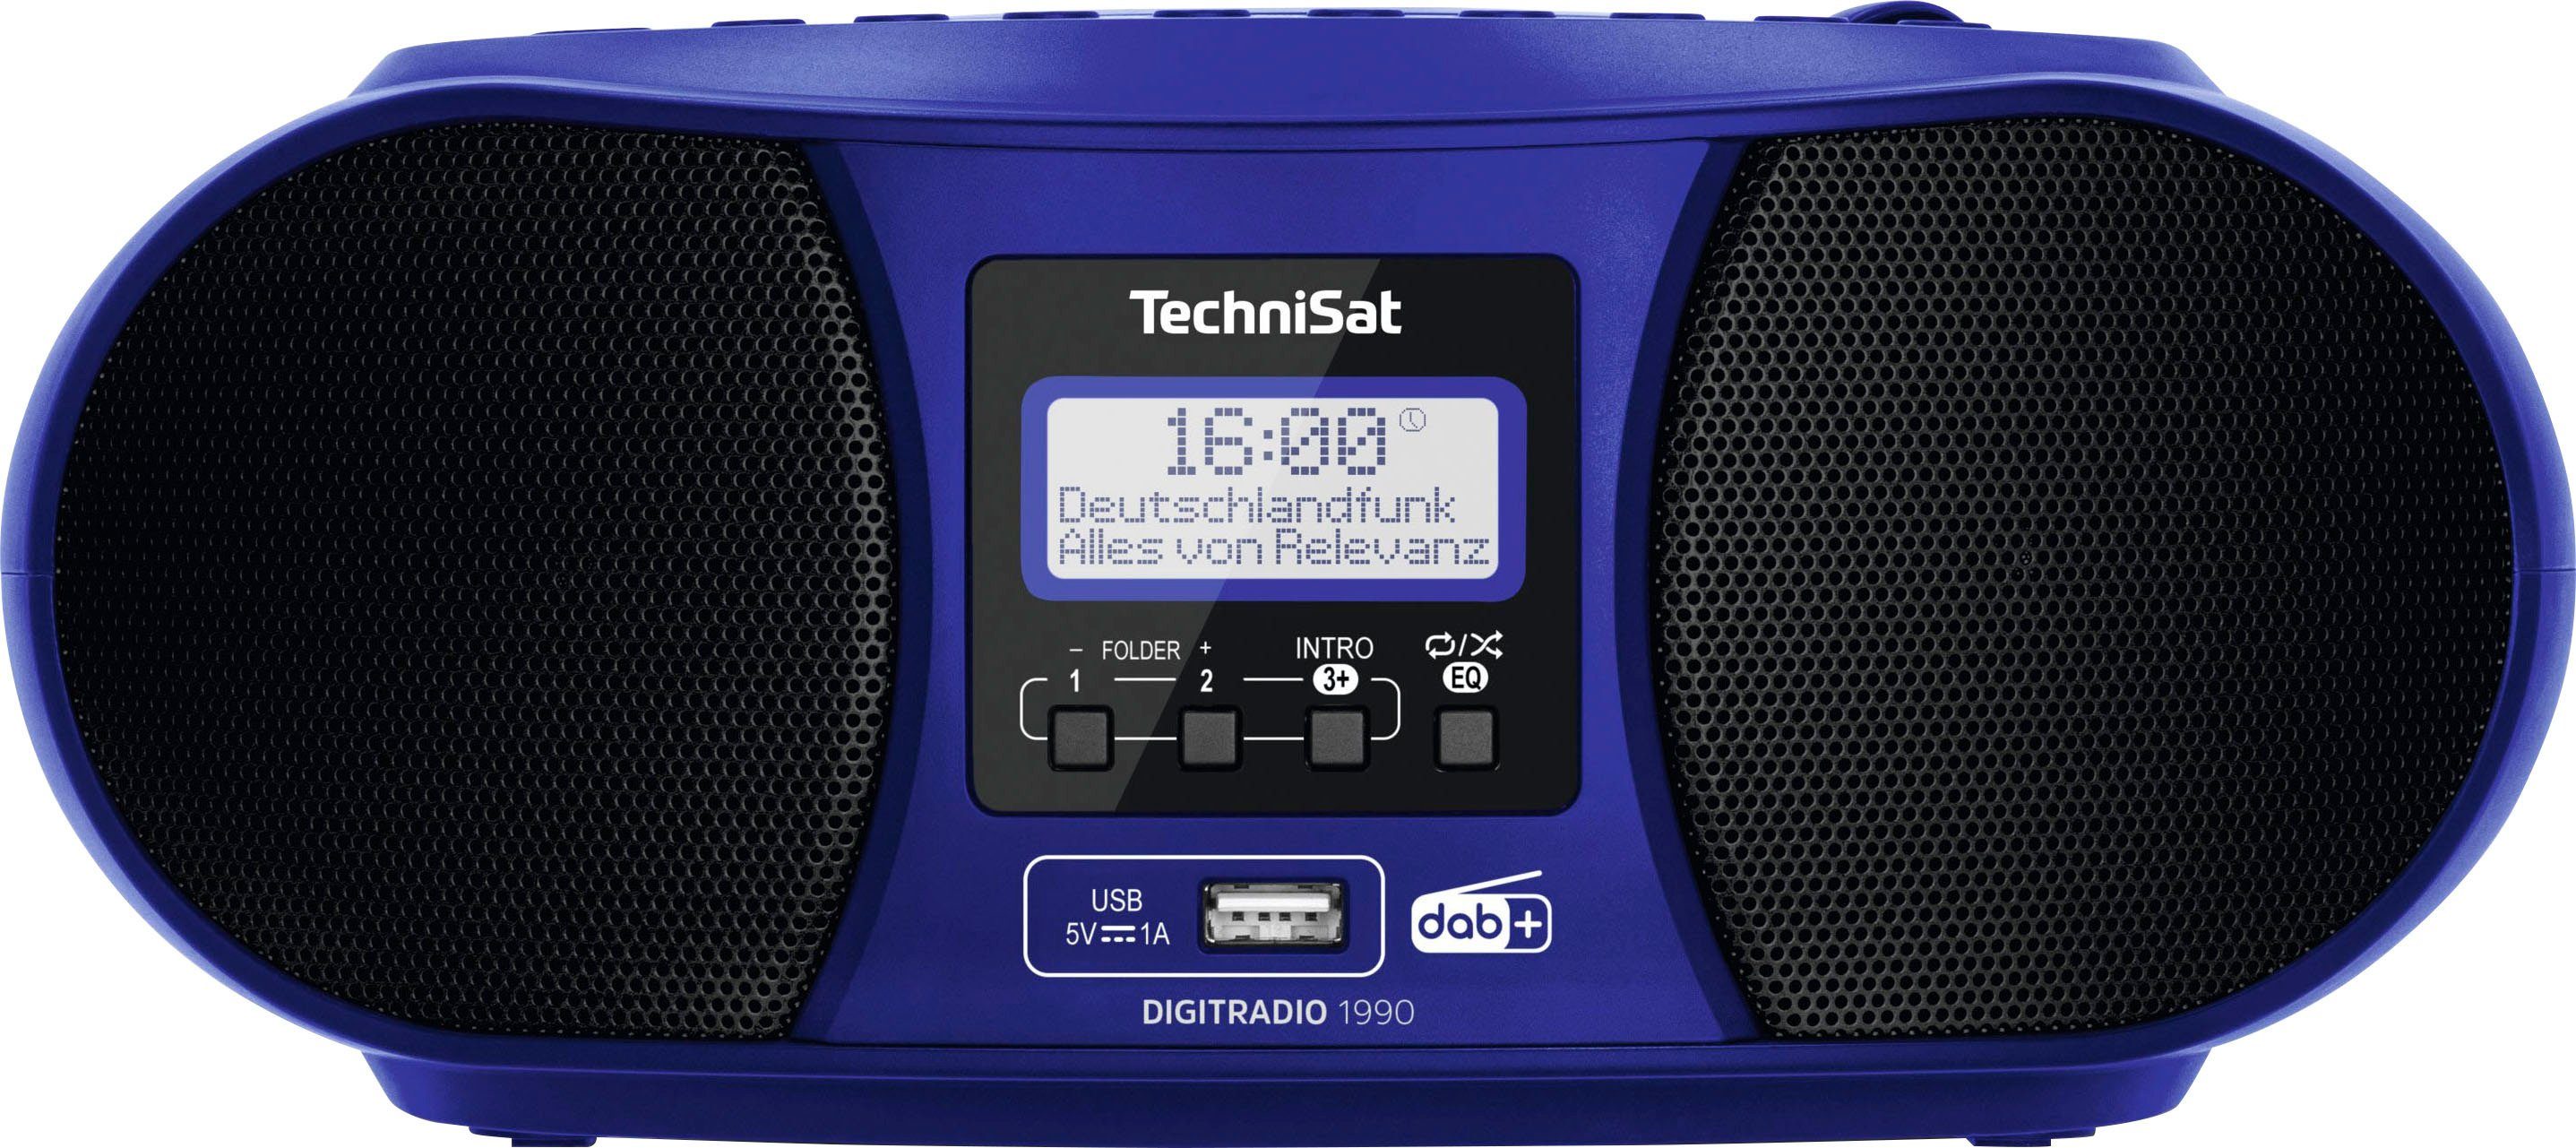 1990 (Digitalradio blau (DAB), Digitalradio TechniSat CD-Player) UKW RDS, (DAB) DIGITRADIO W, 3 mit